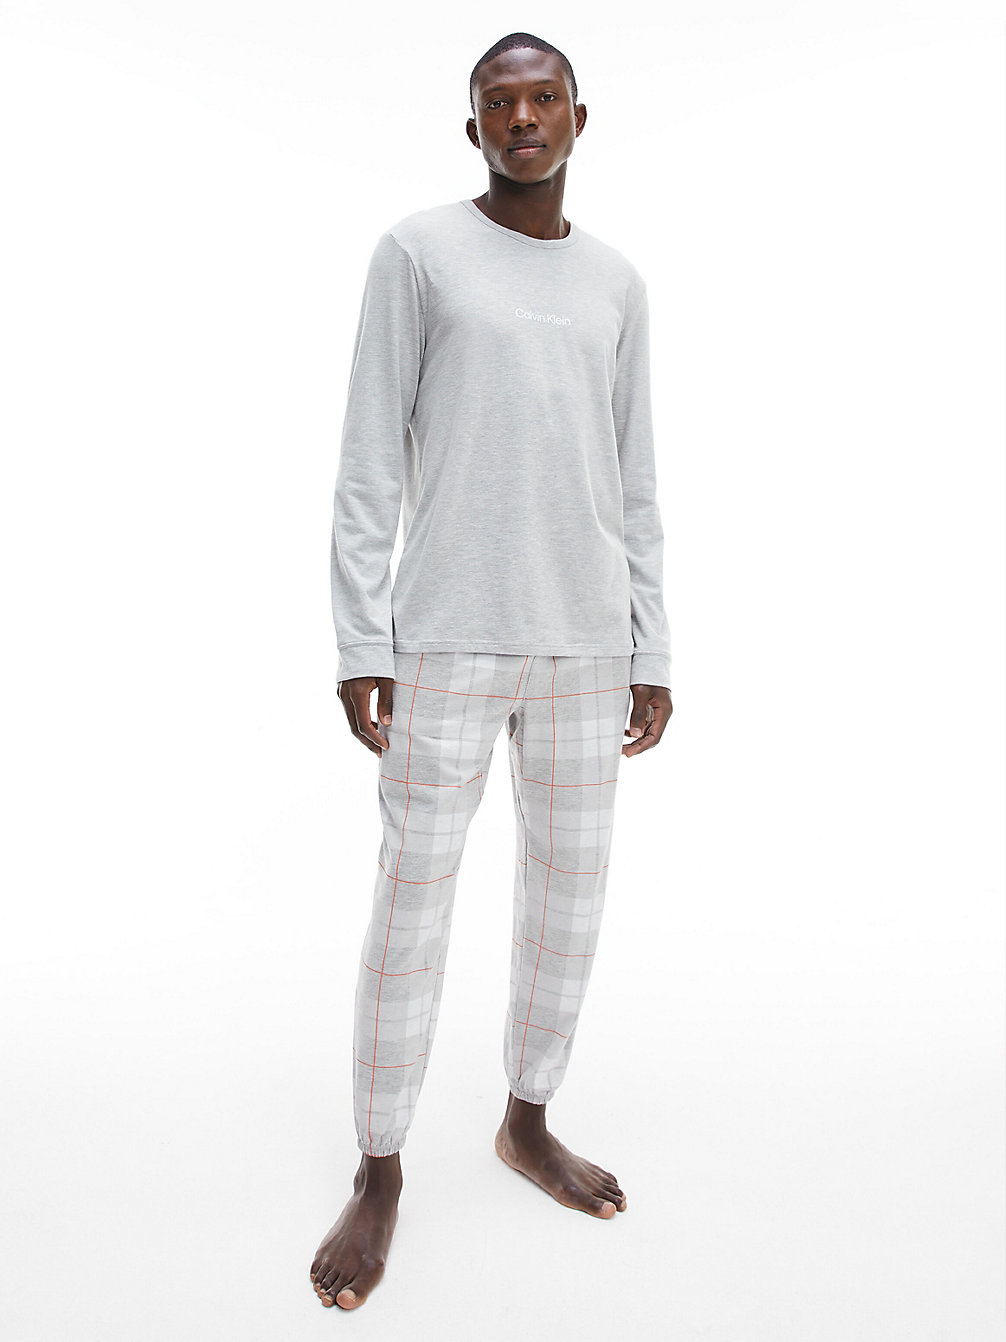 GREY H TOP, GRAPHIC PLAID BOTTOM Ensemble De Pyjama Long - Modern Structure undefined hommes Calvin Klein